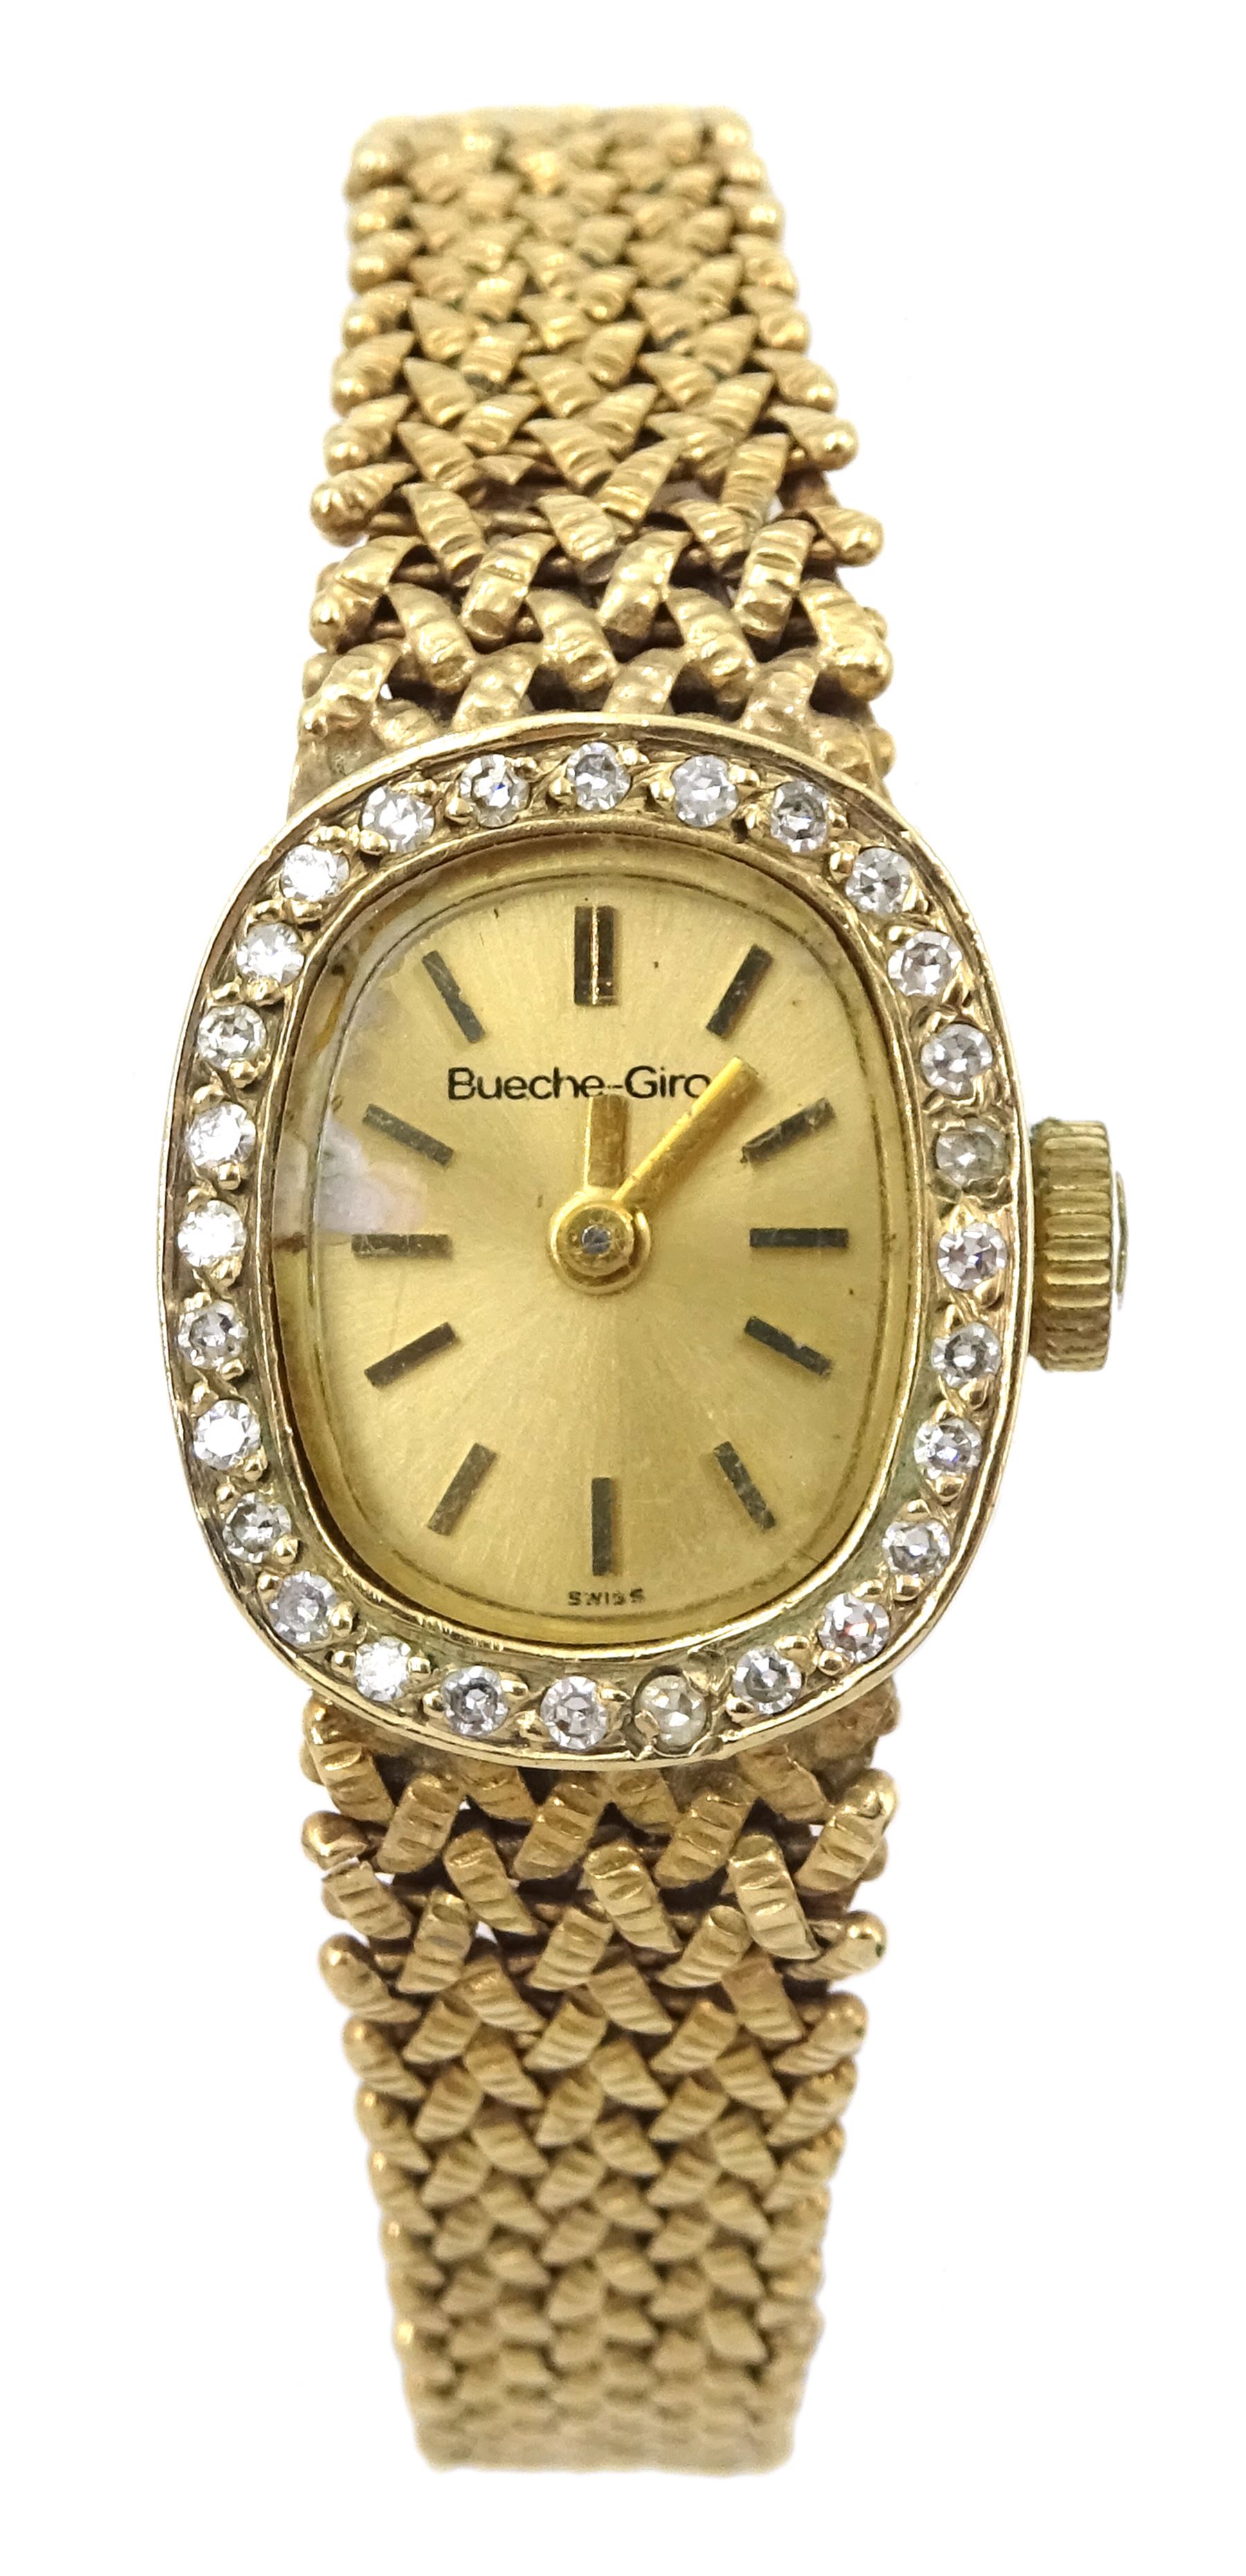 Buche-Girod 9ct gold ladies bracelet wristwatch